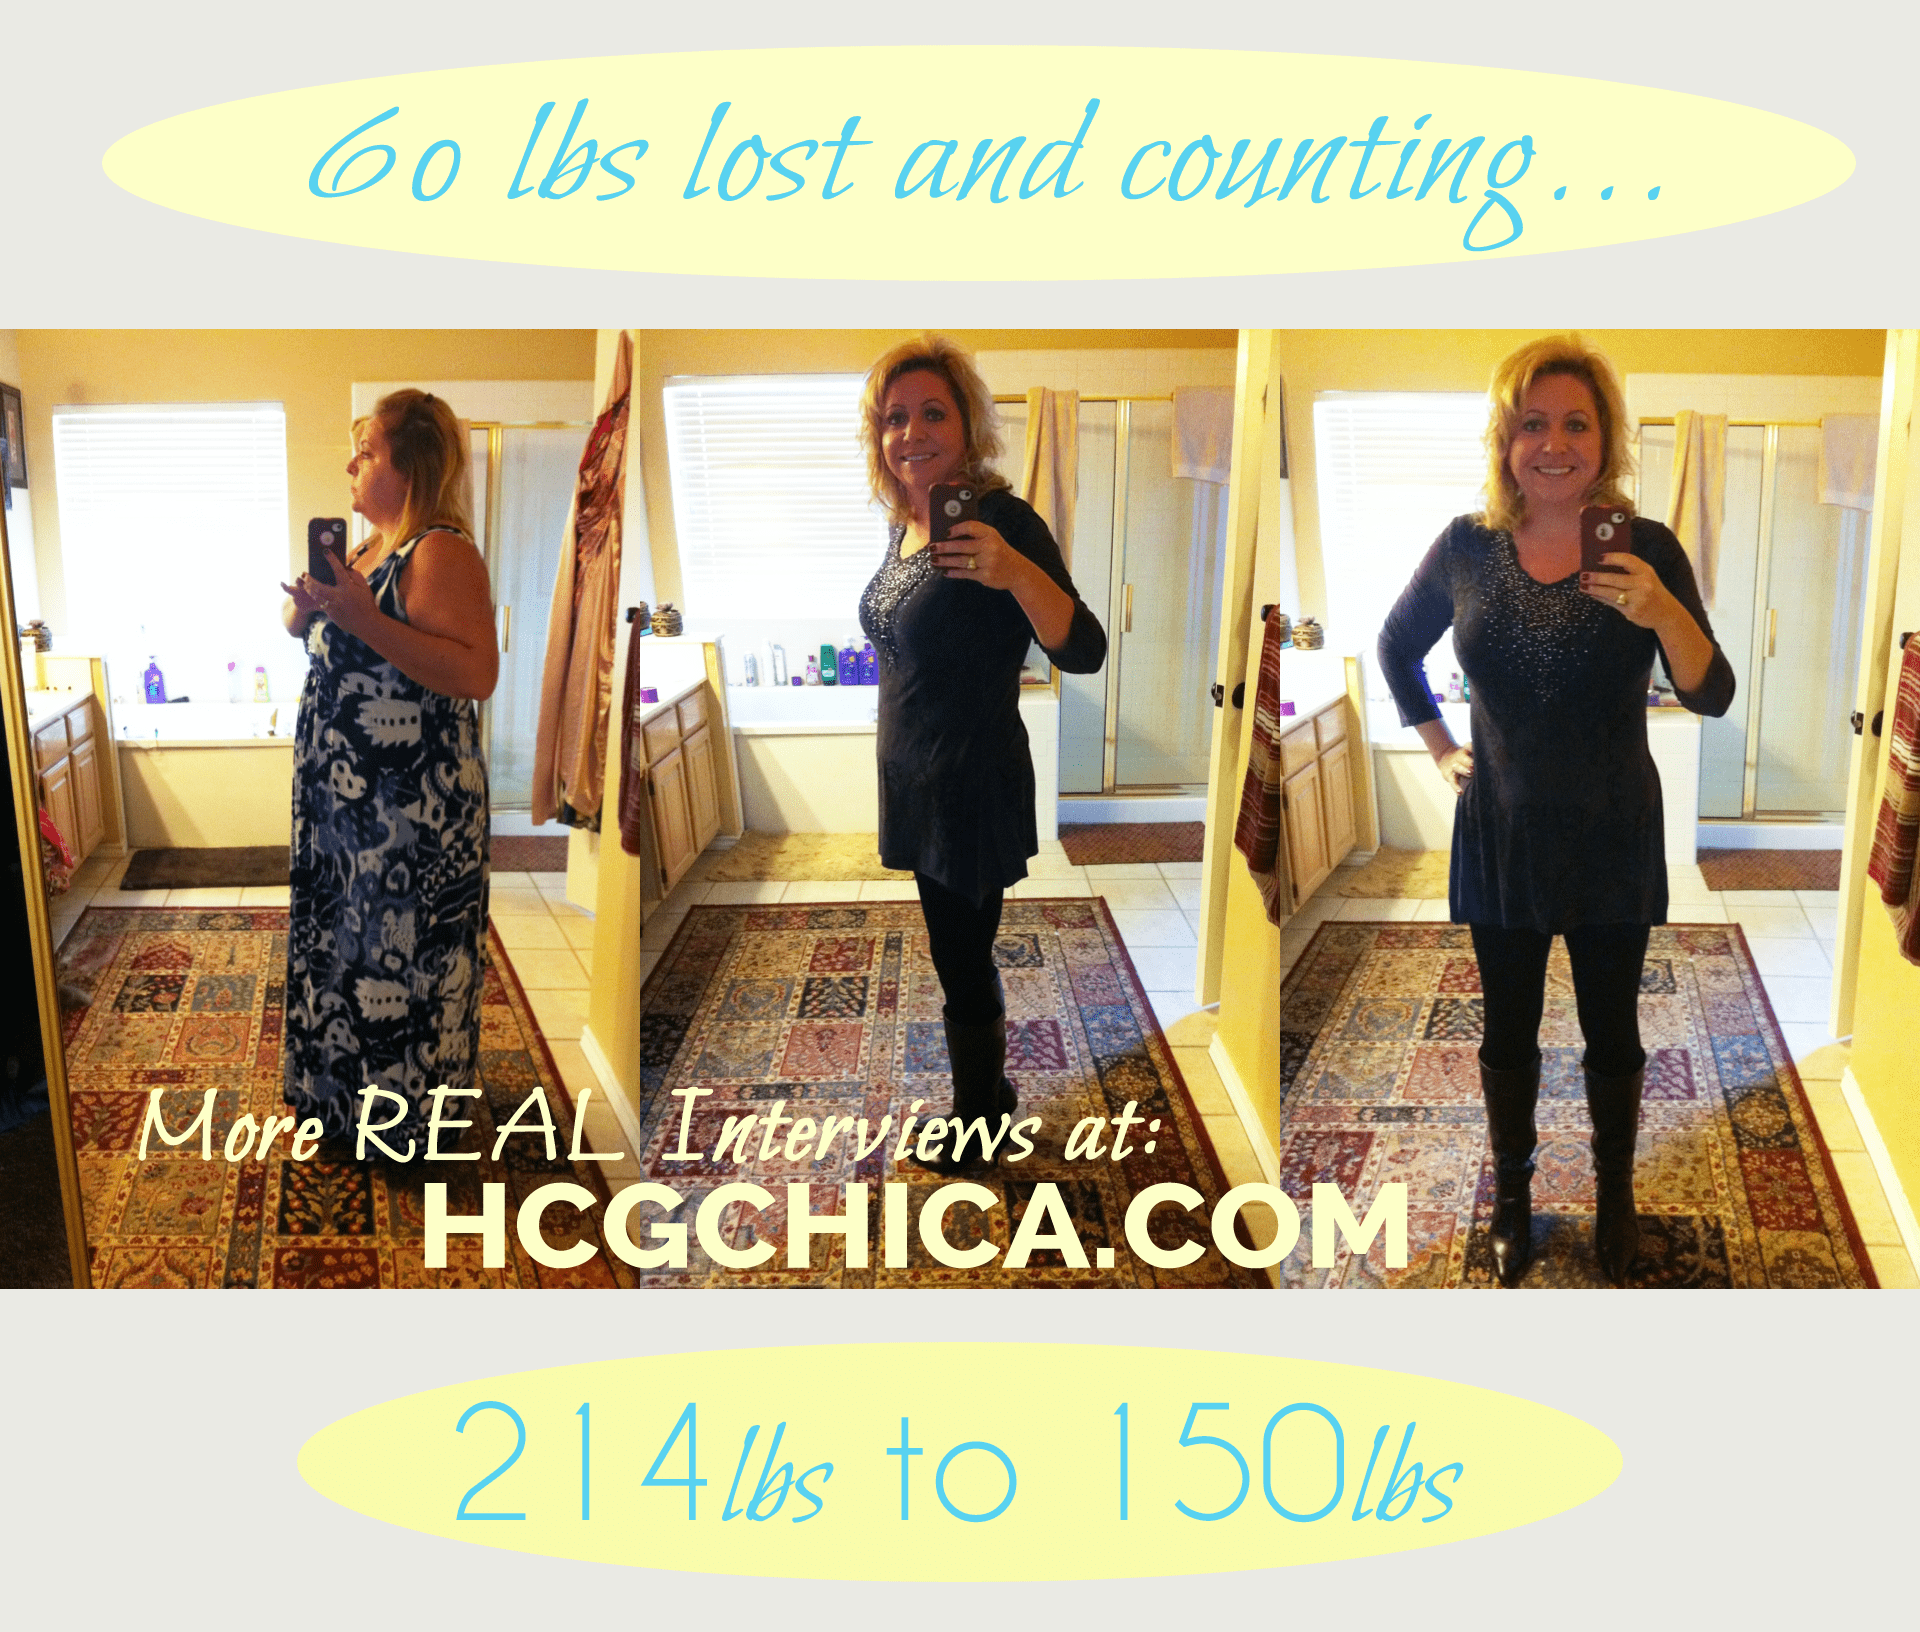 hcg-diet-results-episode-4-hcgchica